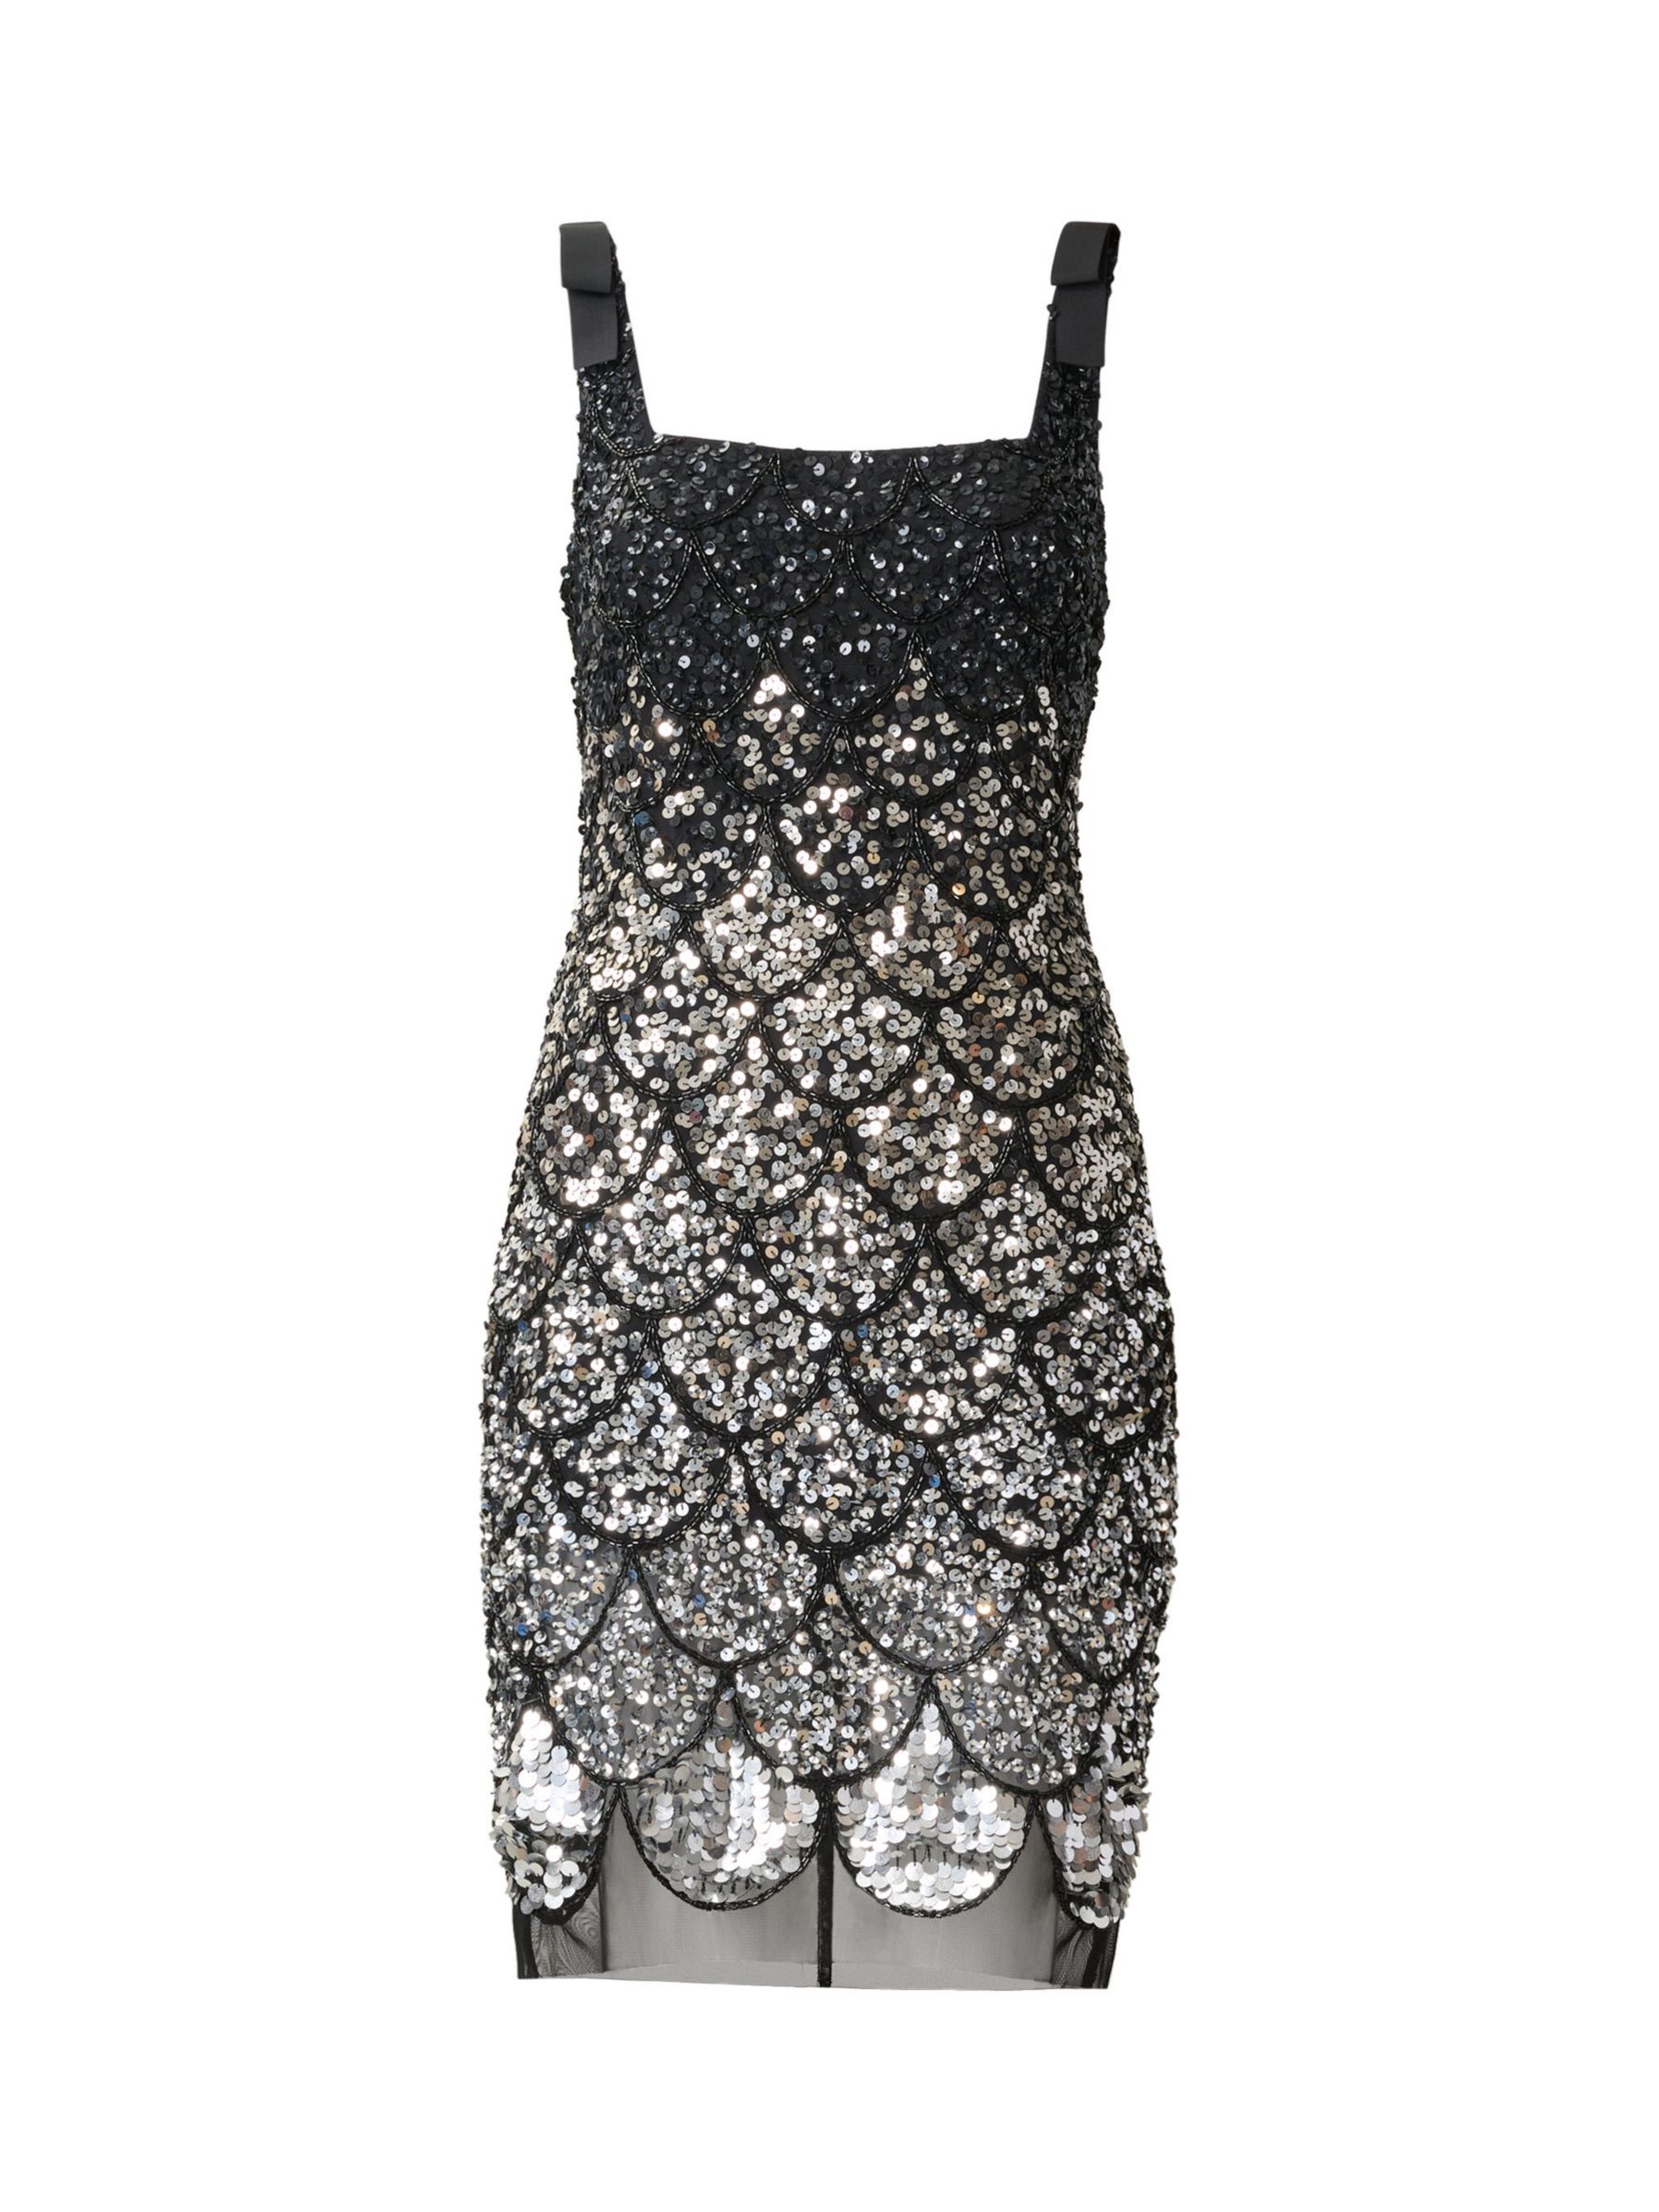 Adrianna Papell Scallop Beaded Mini Dress, Black/Silver, 6